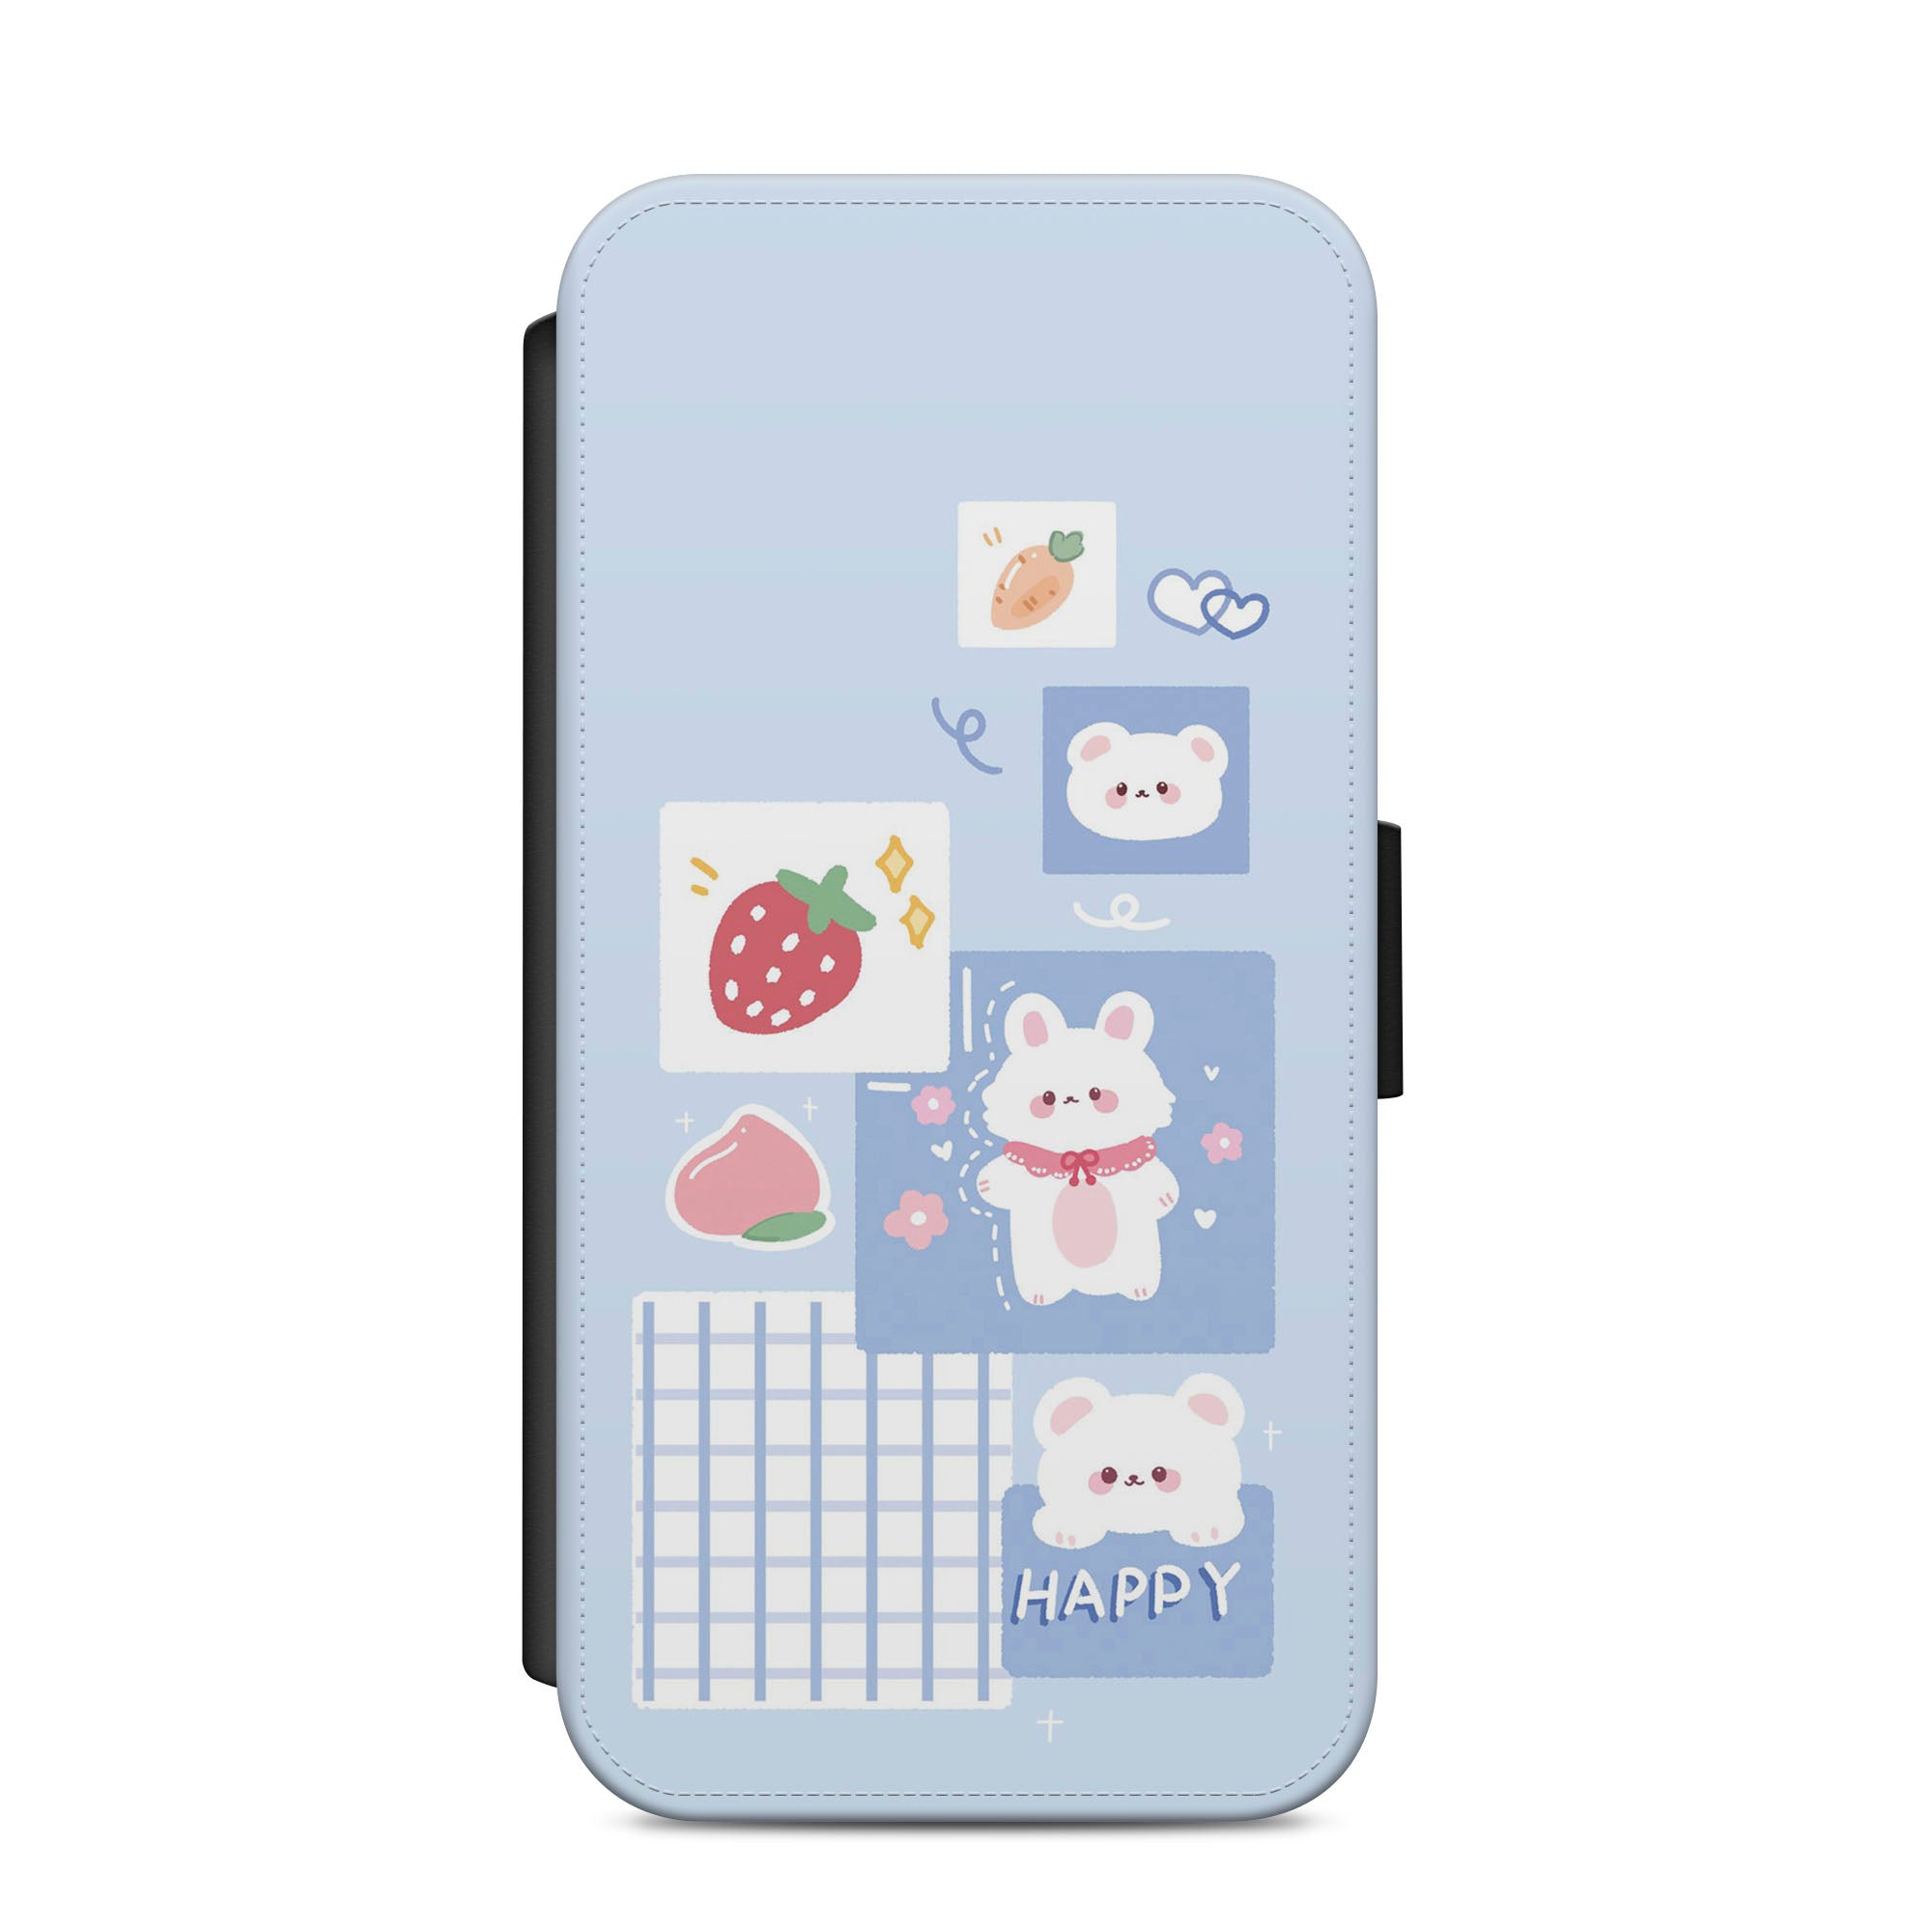 Cute Kawaii Cute Kawaii Faux Leather Flip Case Wallet for iPhone / Samsung